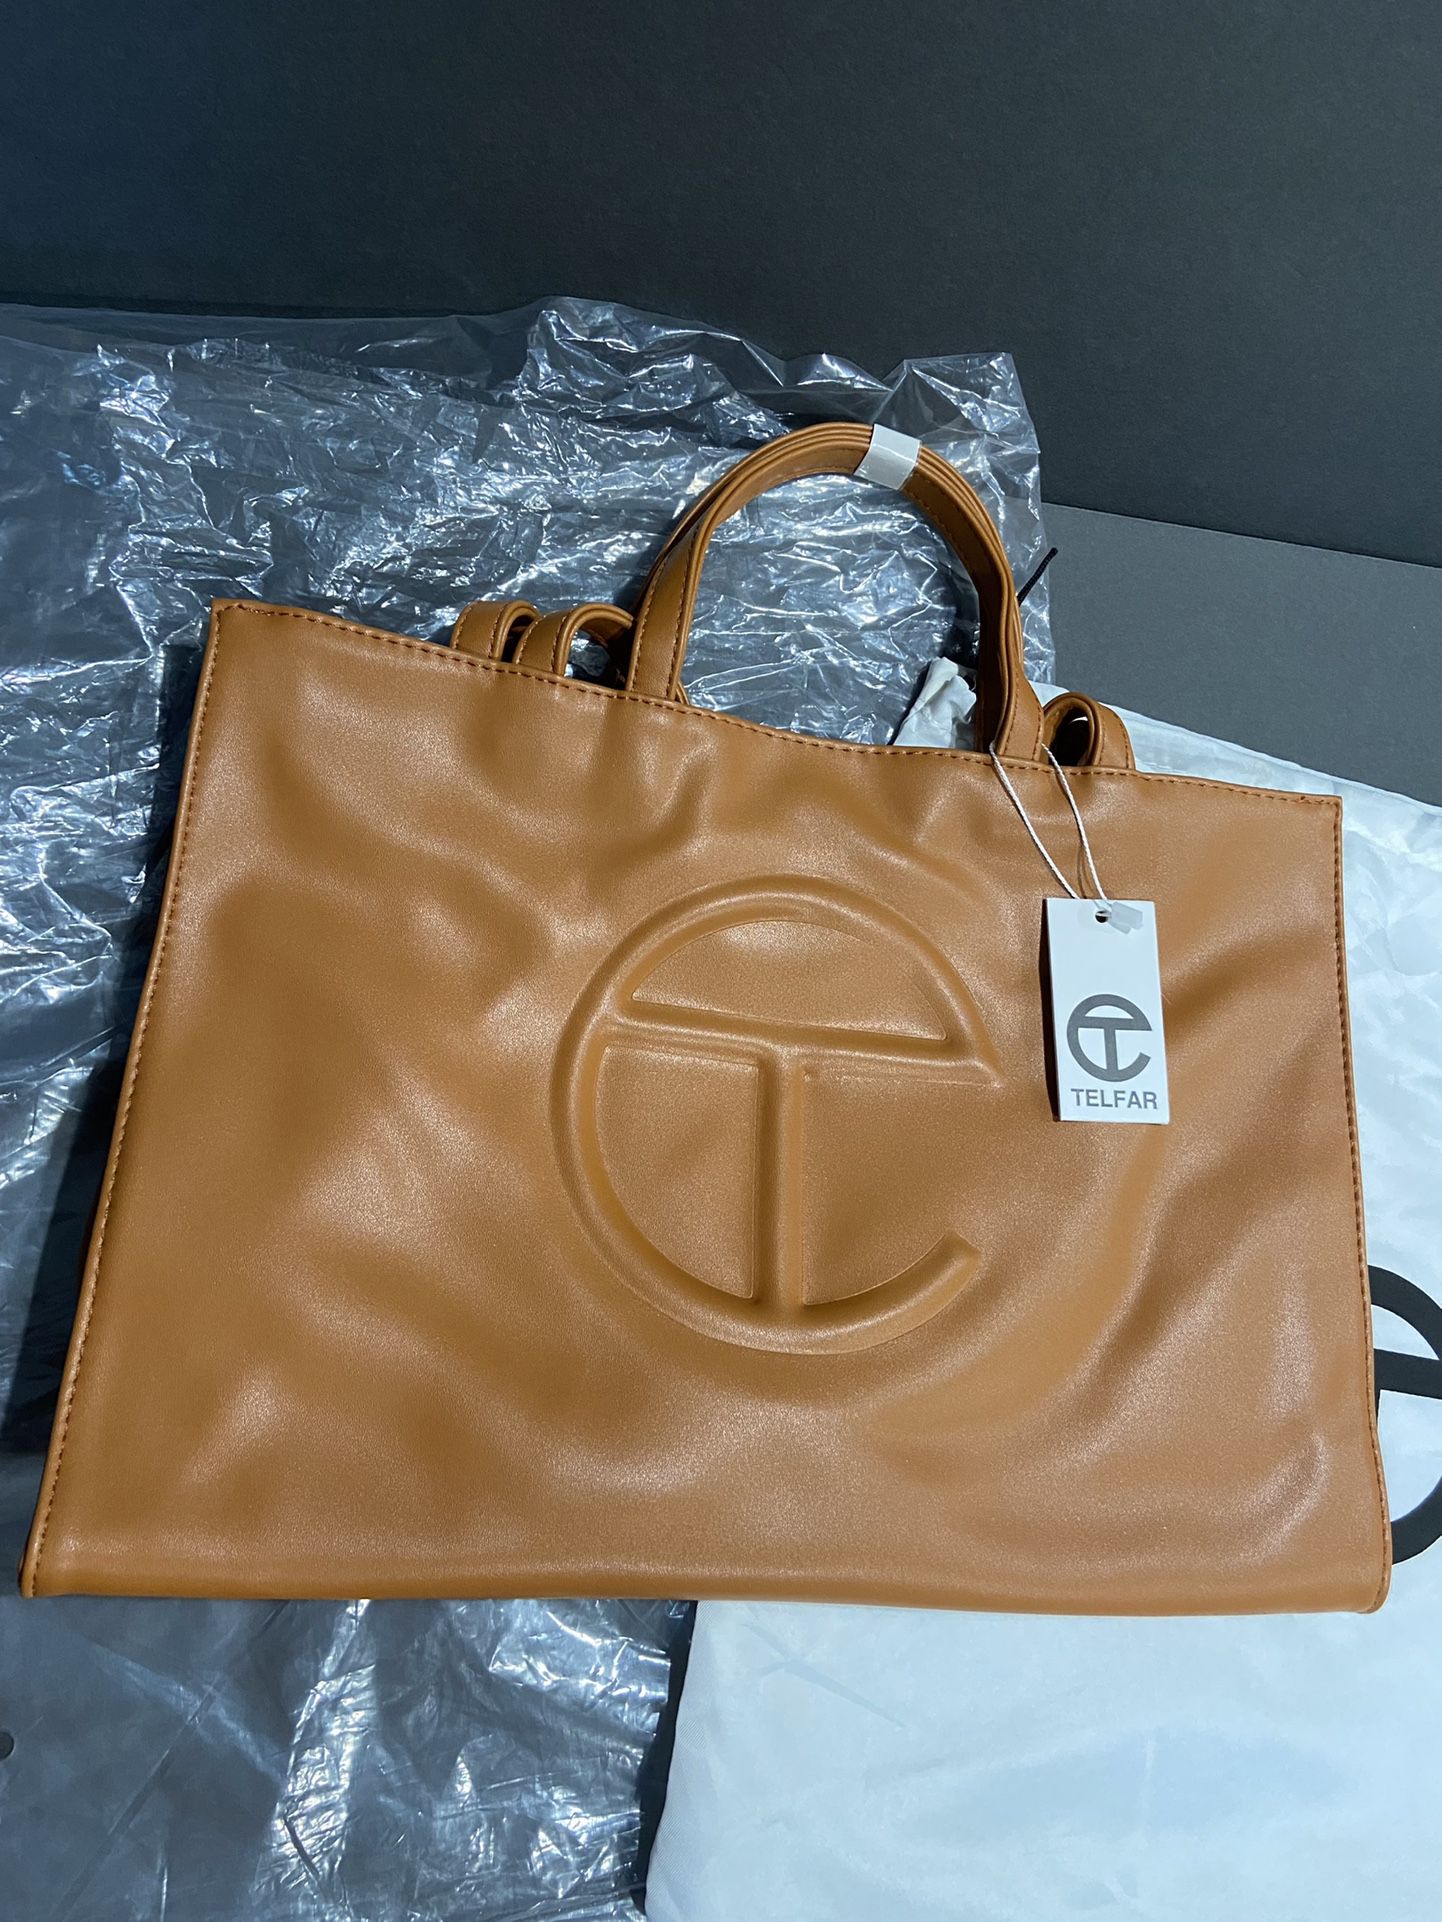 Telfar Medium Tan Shopping Bag for Sale in Irvine, CA - OfferUp